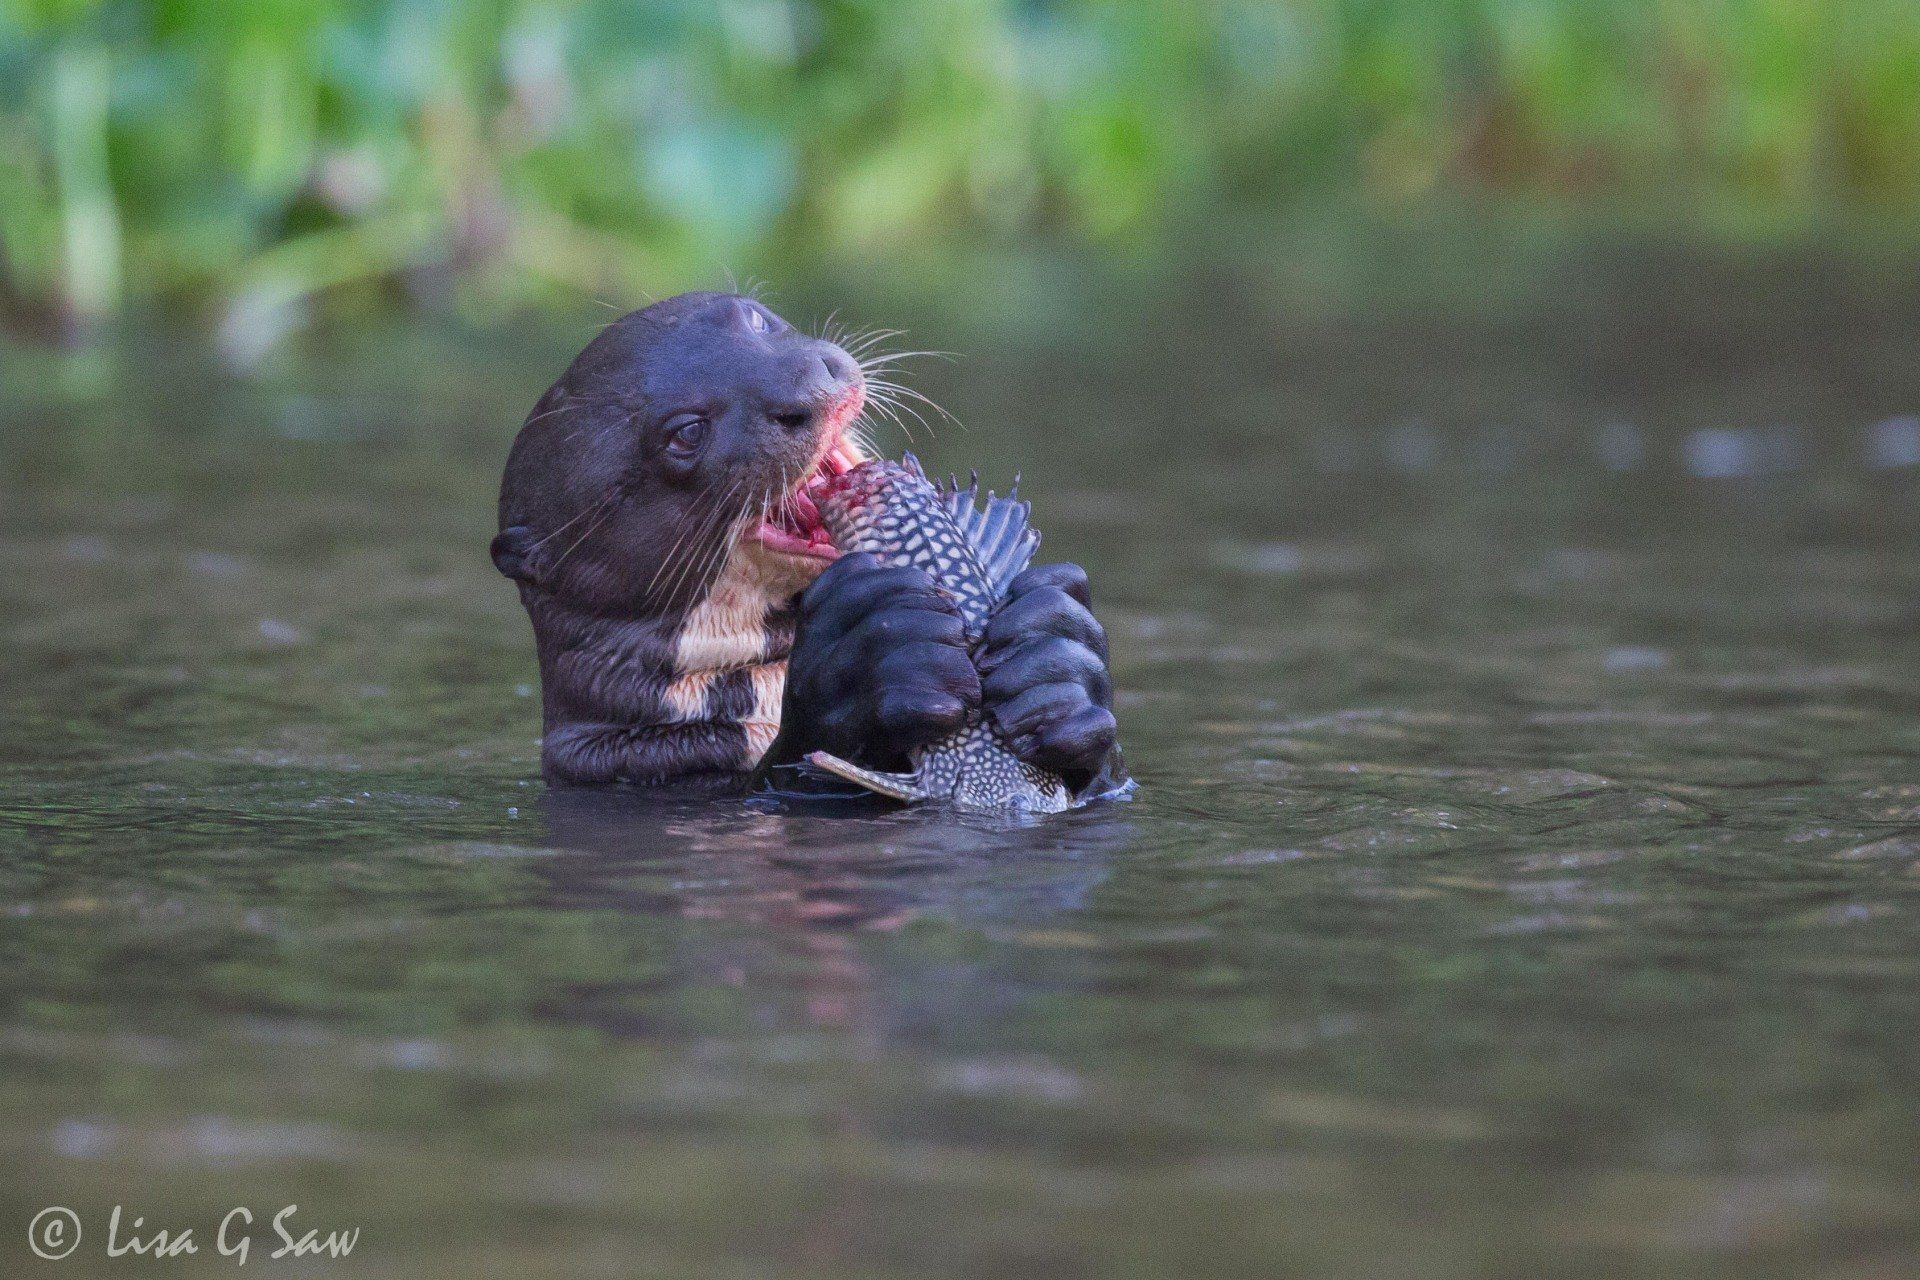 Giant River Otter eating Catfish in river